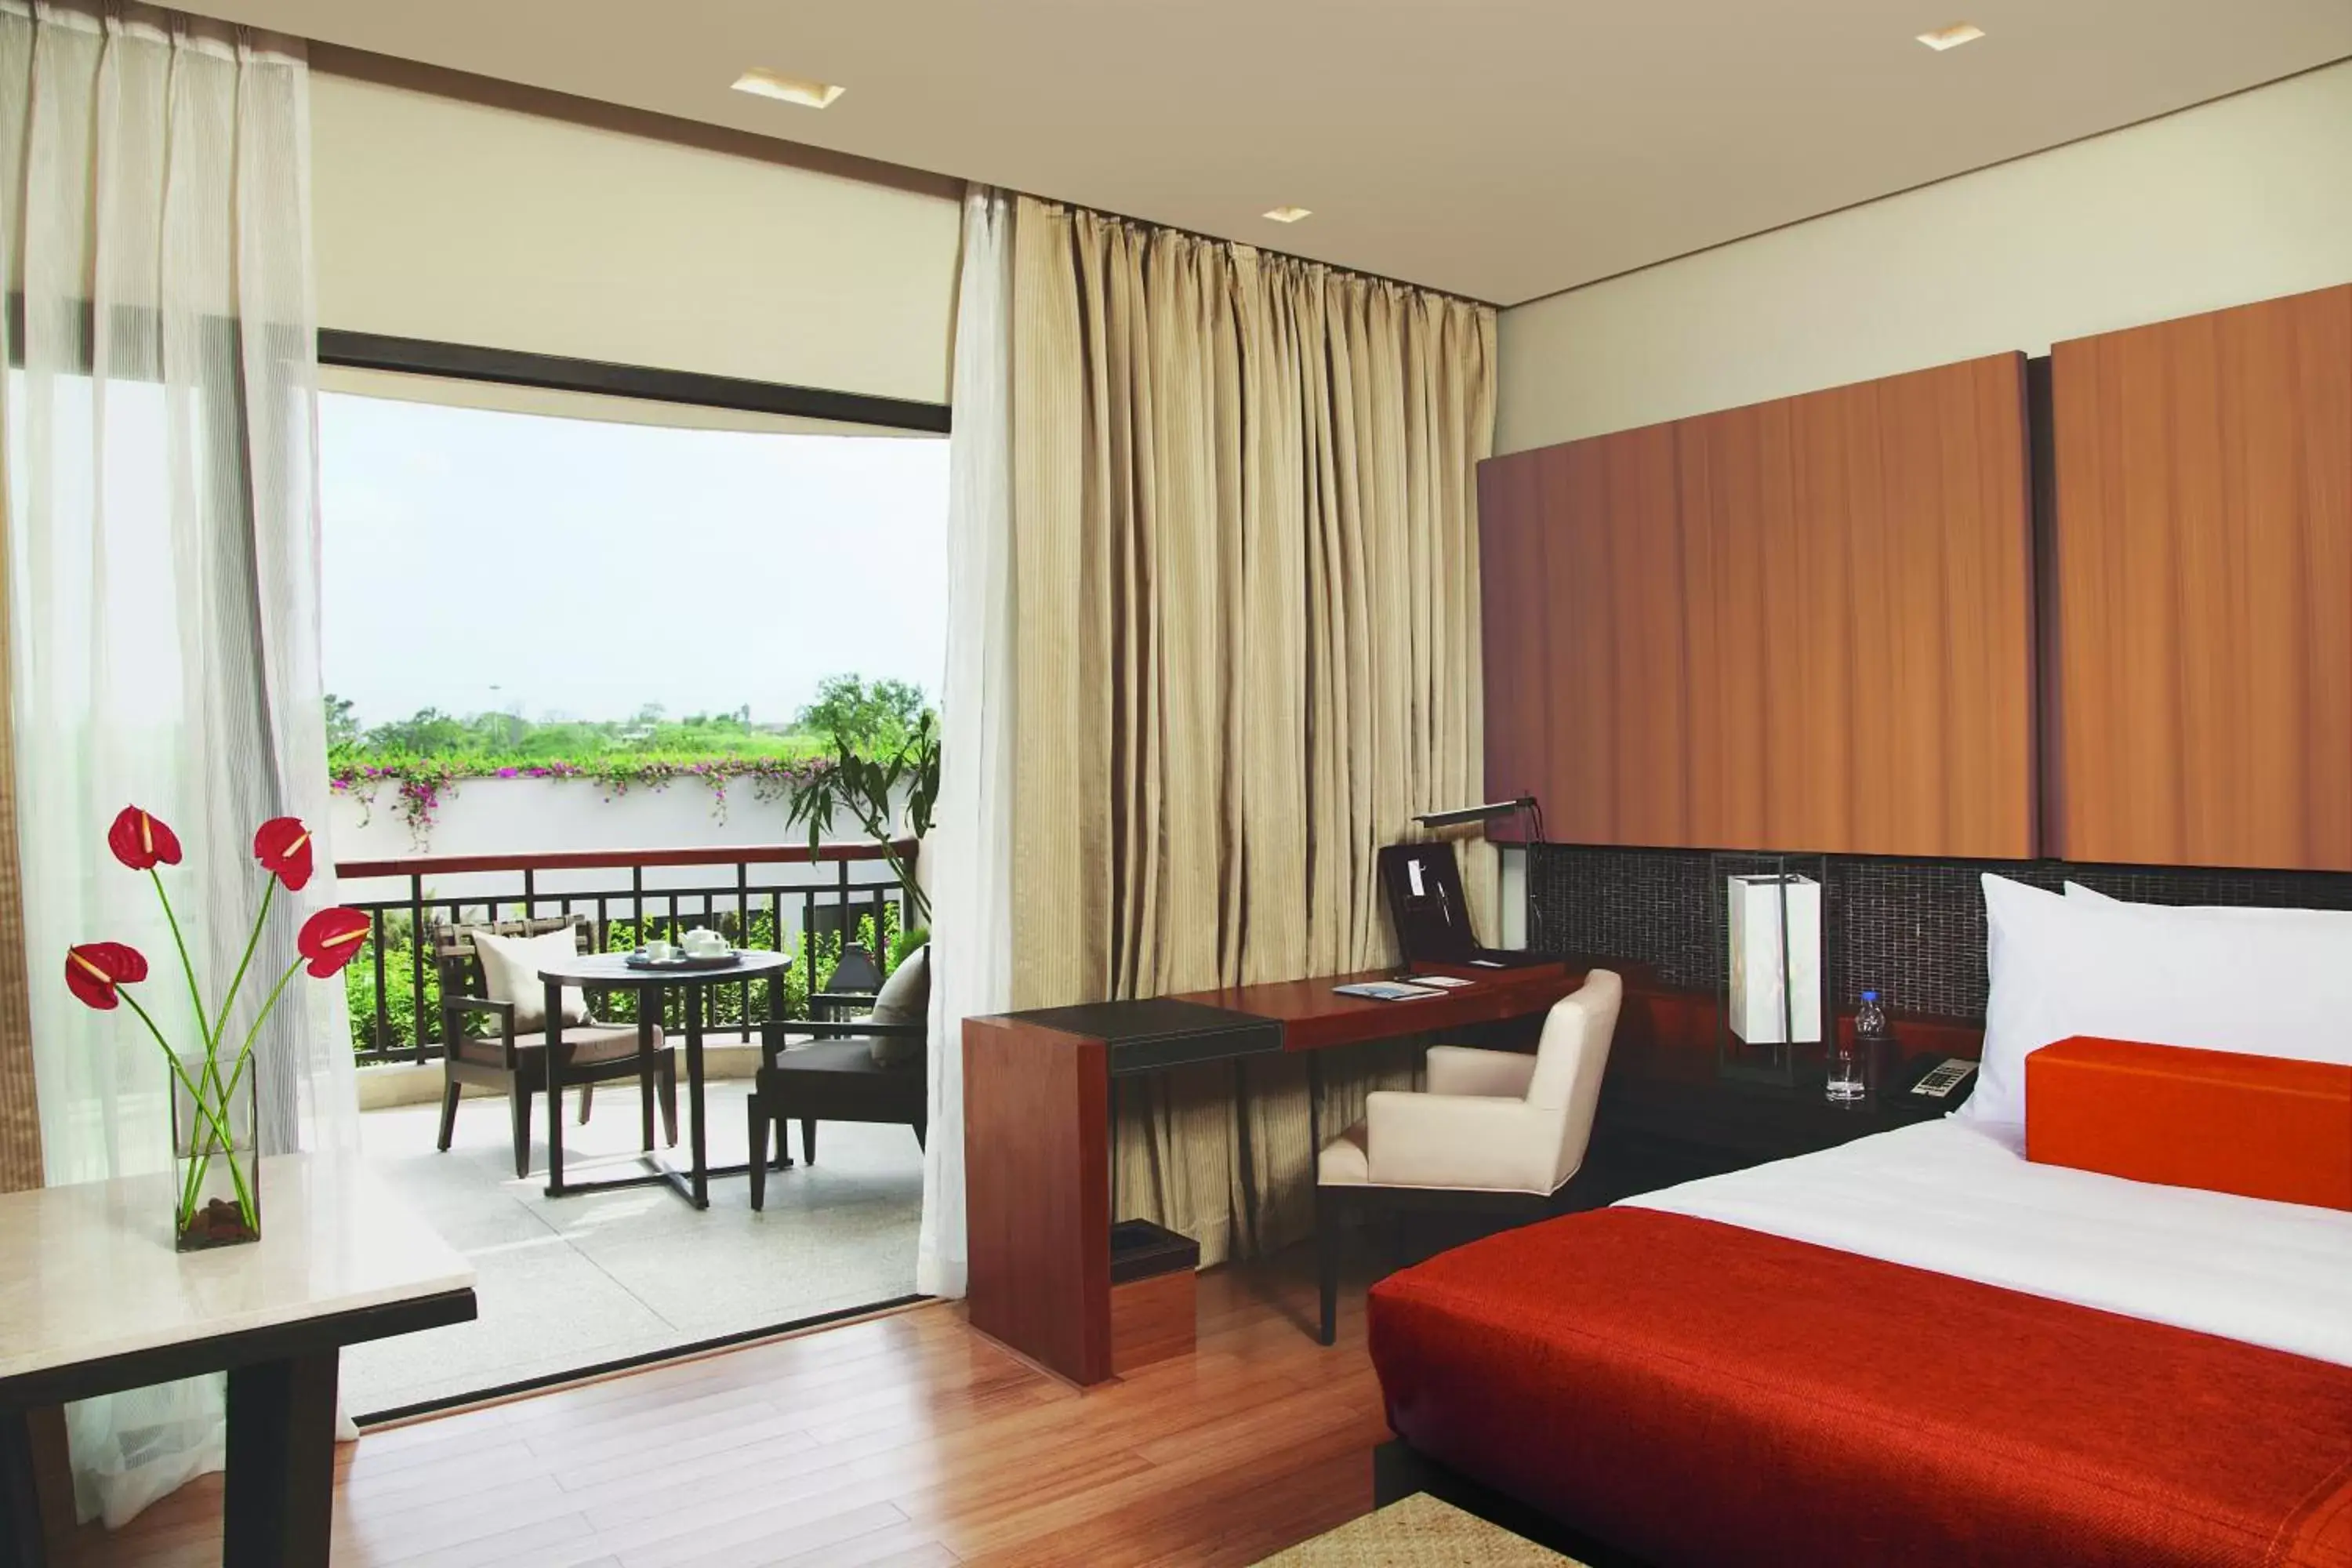 Premium Temptation Suite Courtyard View King Bed - single occupancy in Vivanta Surajkund, NCR